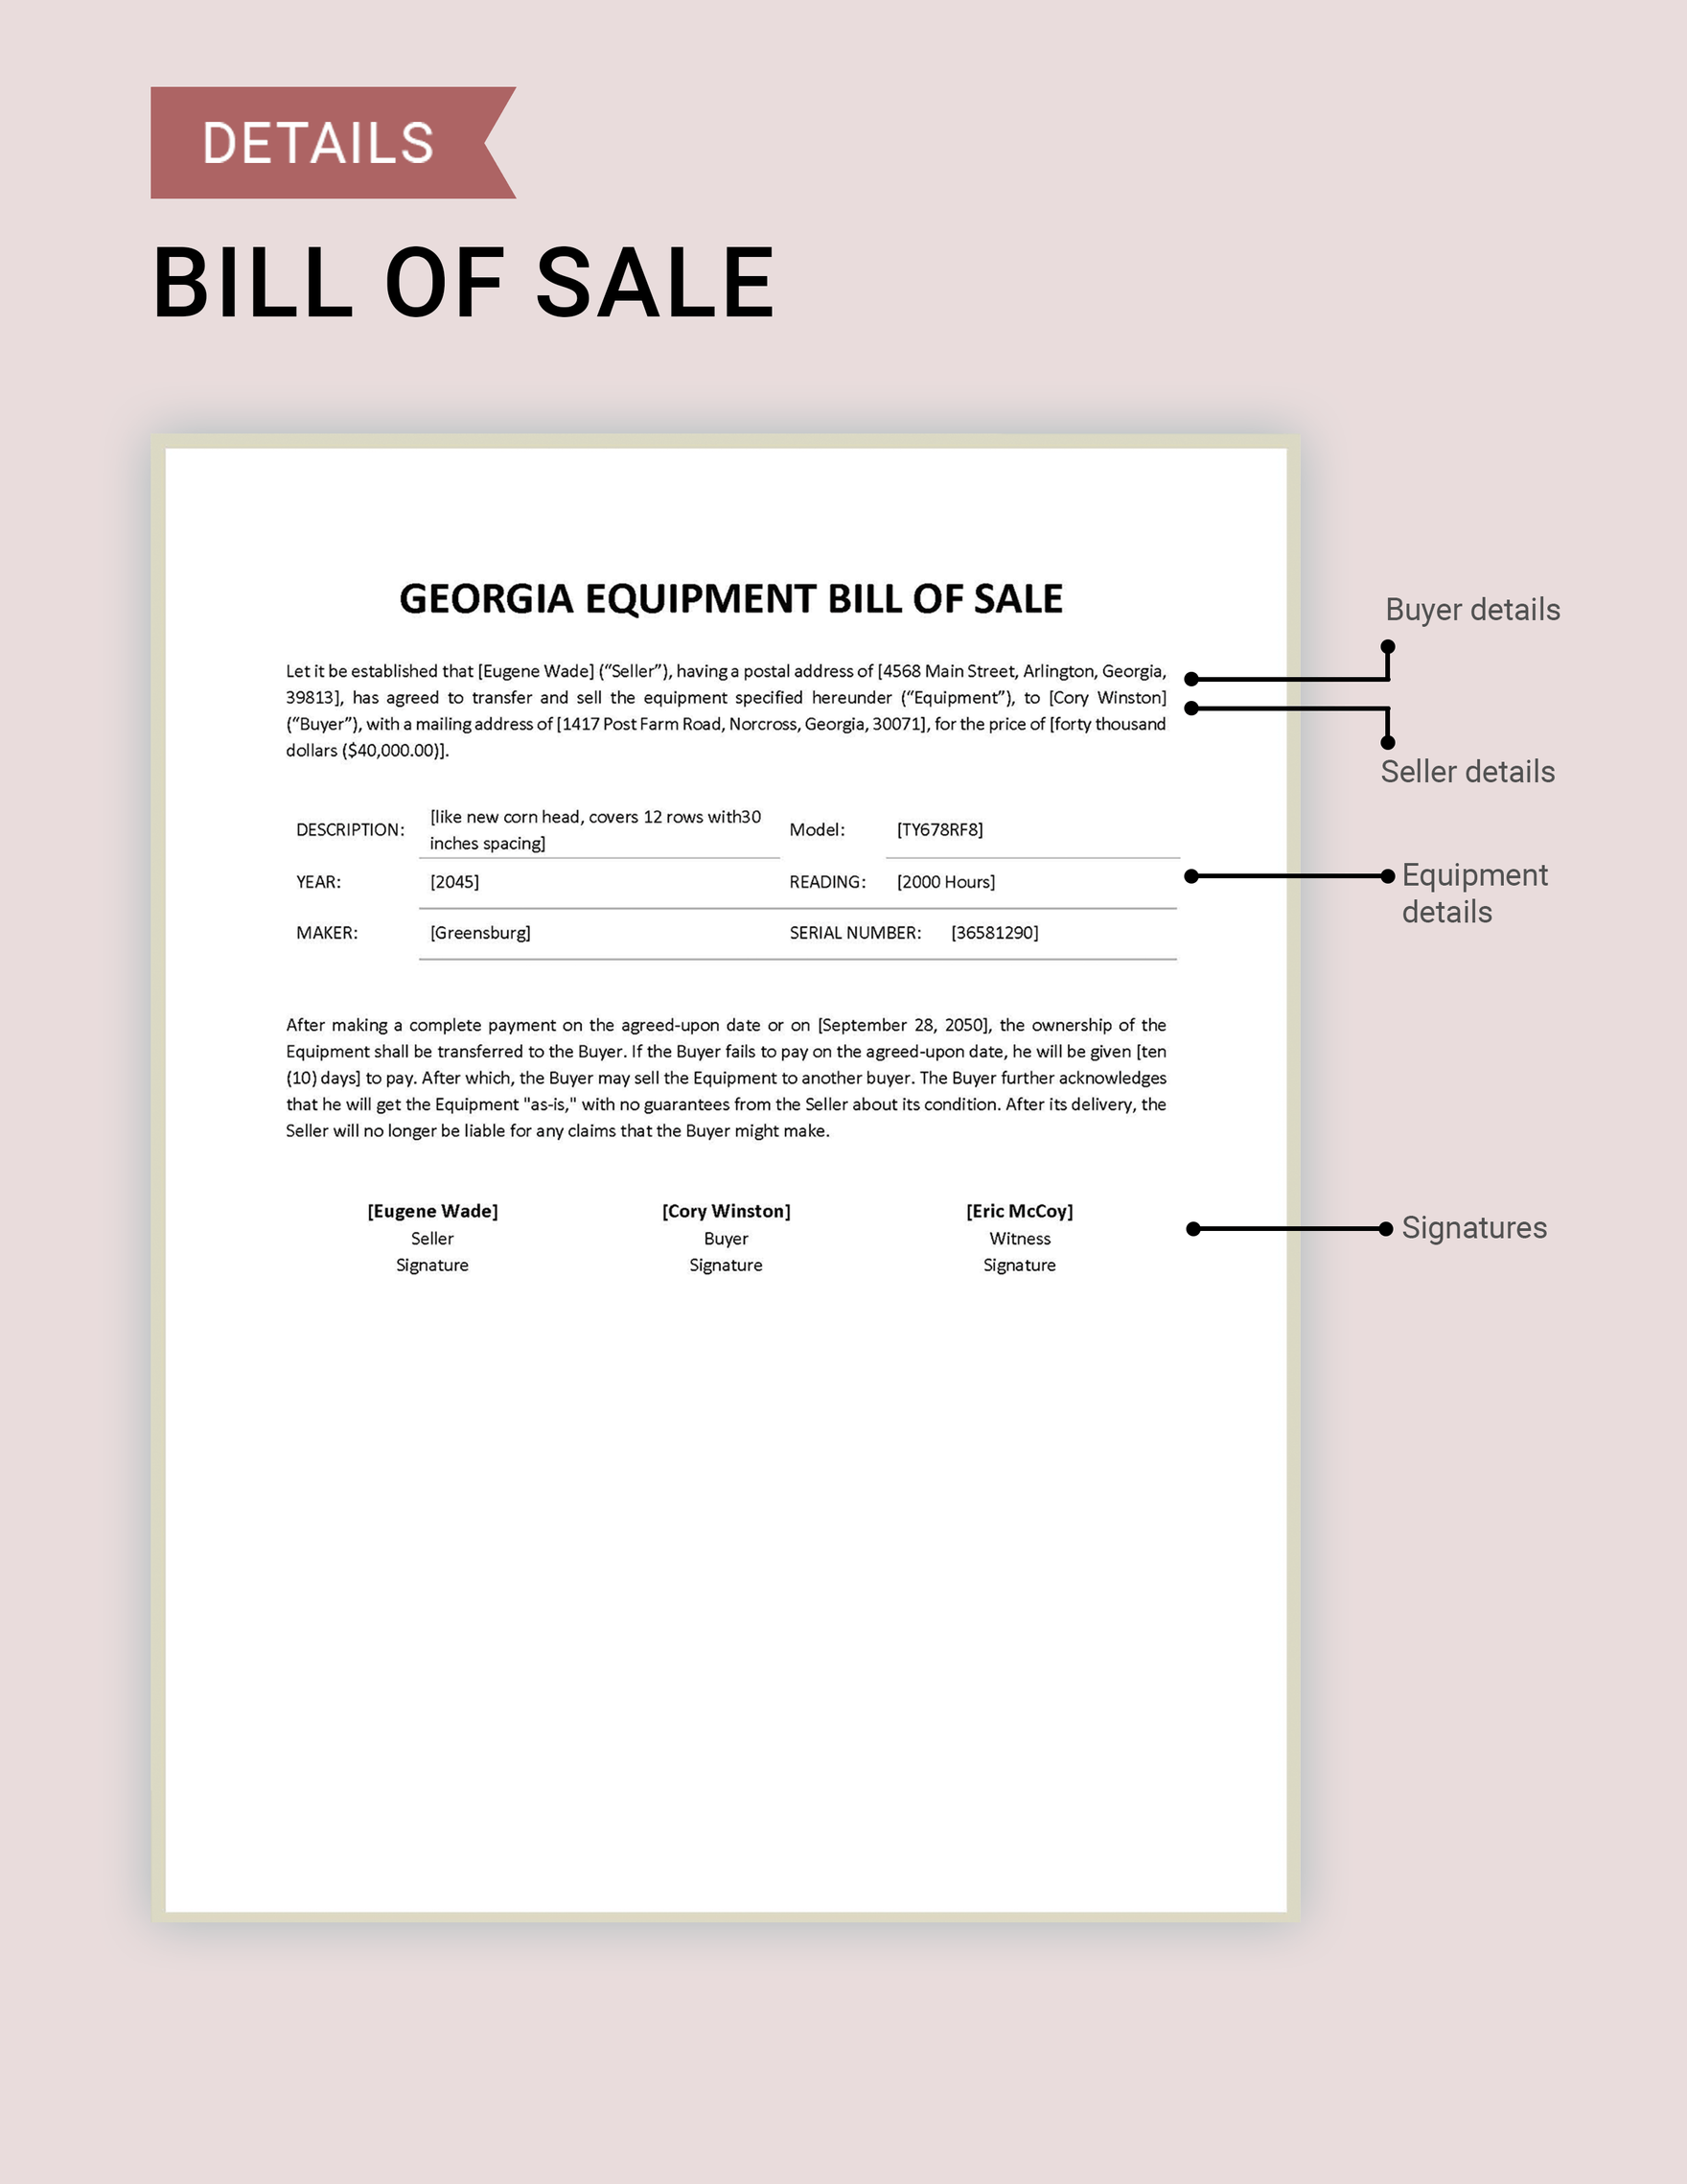 Georgia Equipment Bill of Sale Template